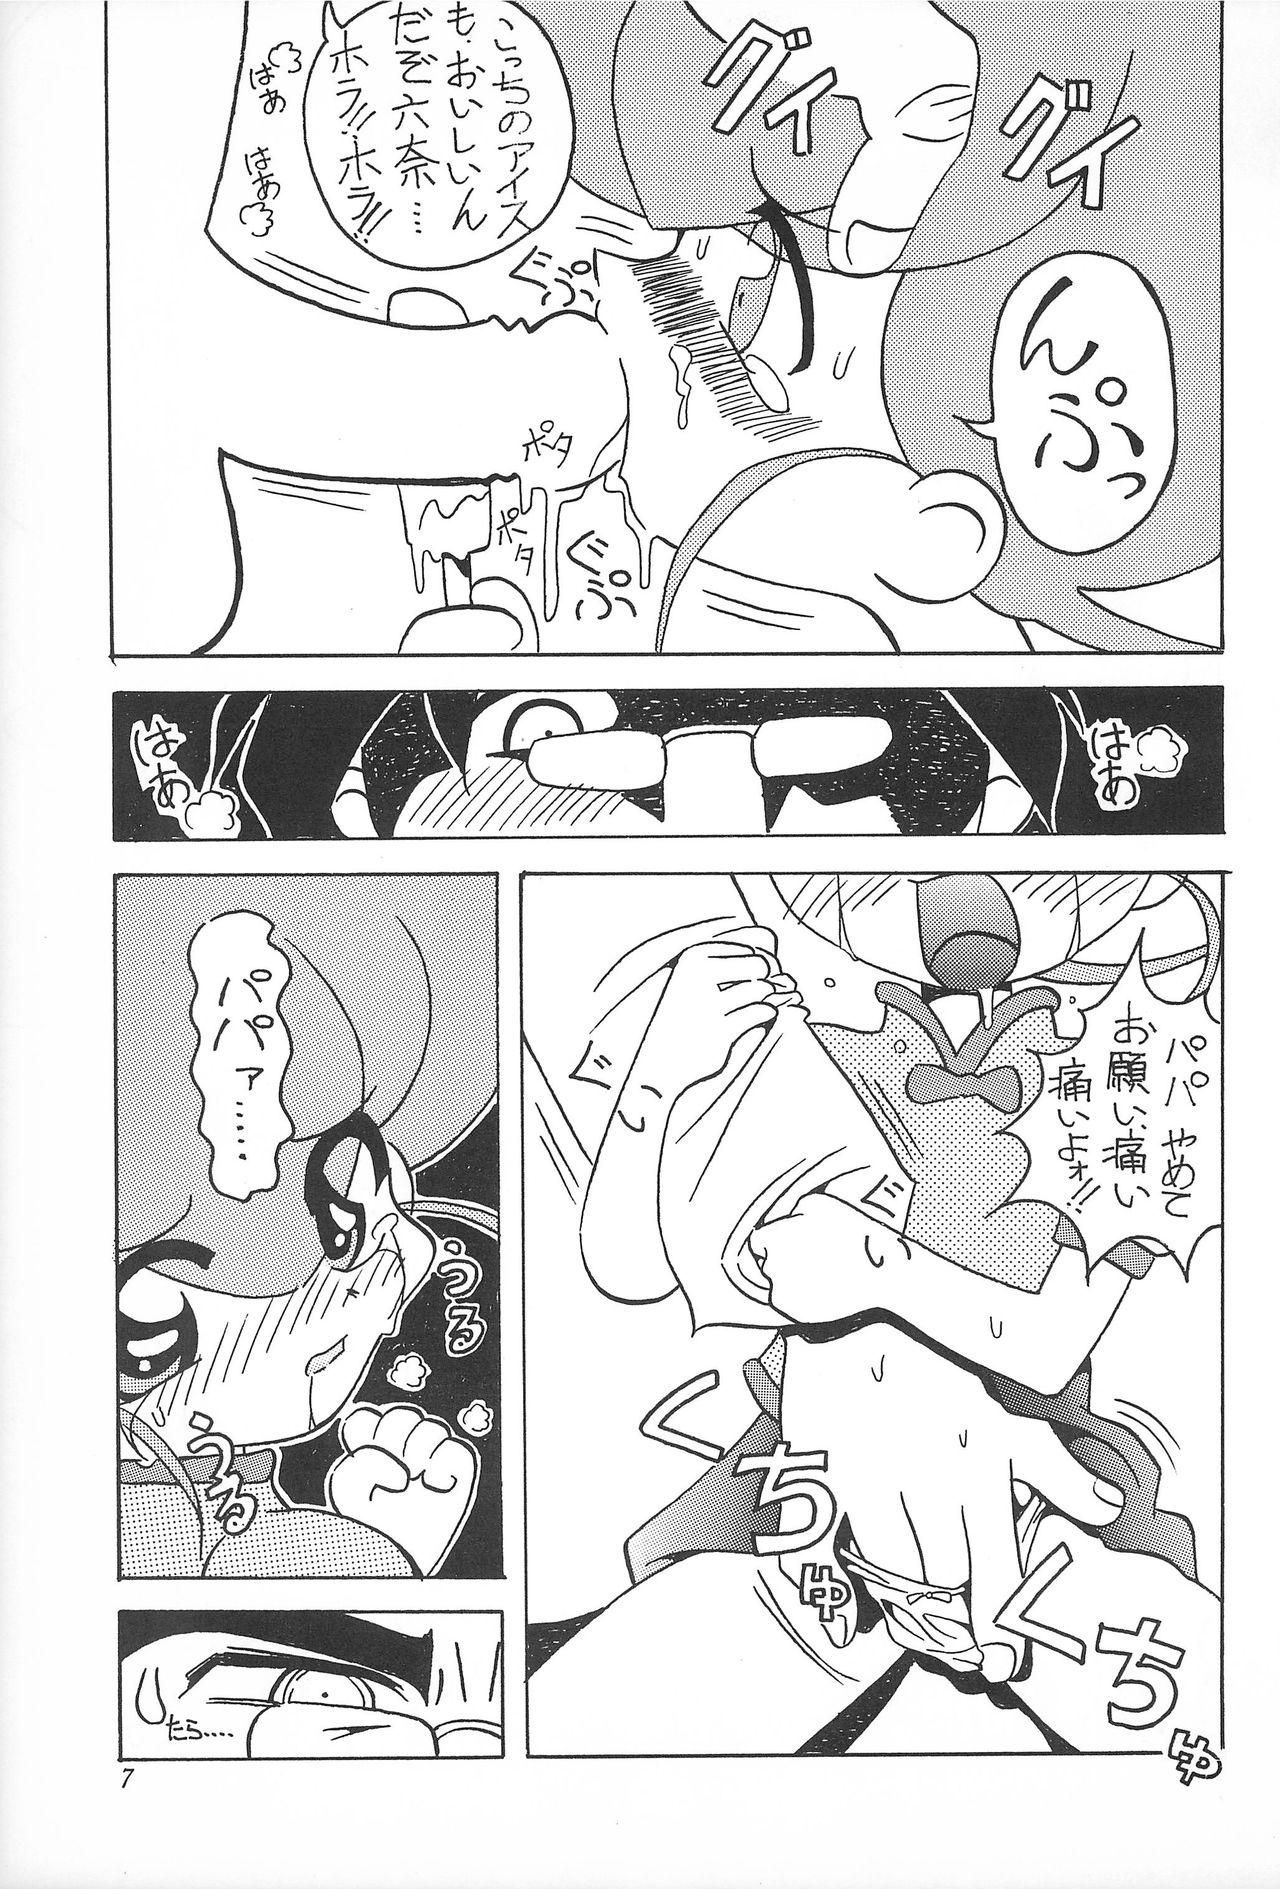 Stockings Rokushin Gattai - Magewappa 13 - Mon colle knights Sex Toy - Page 8